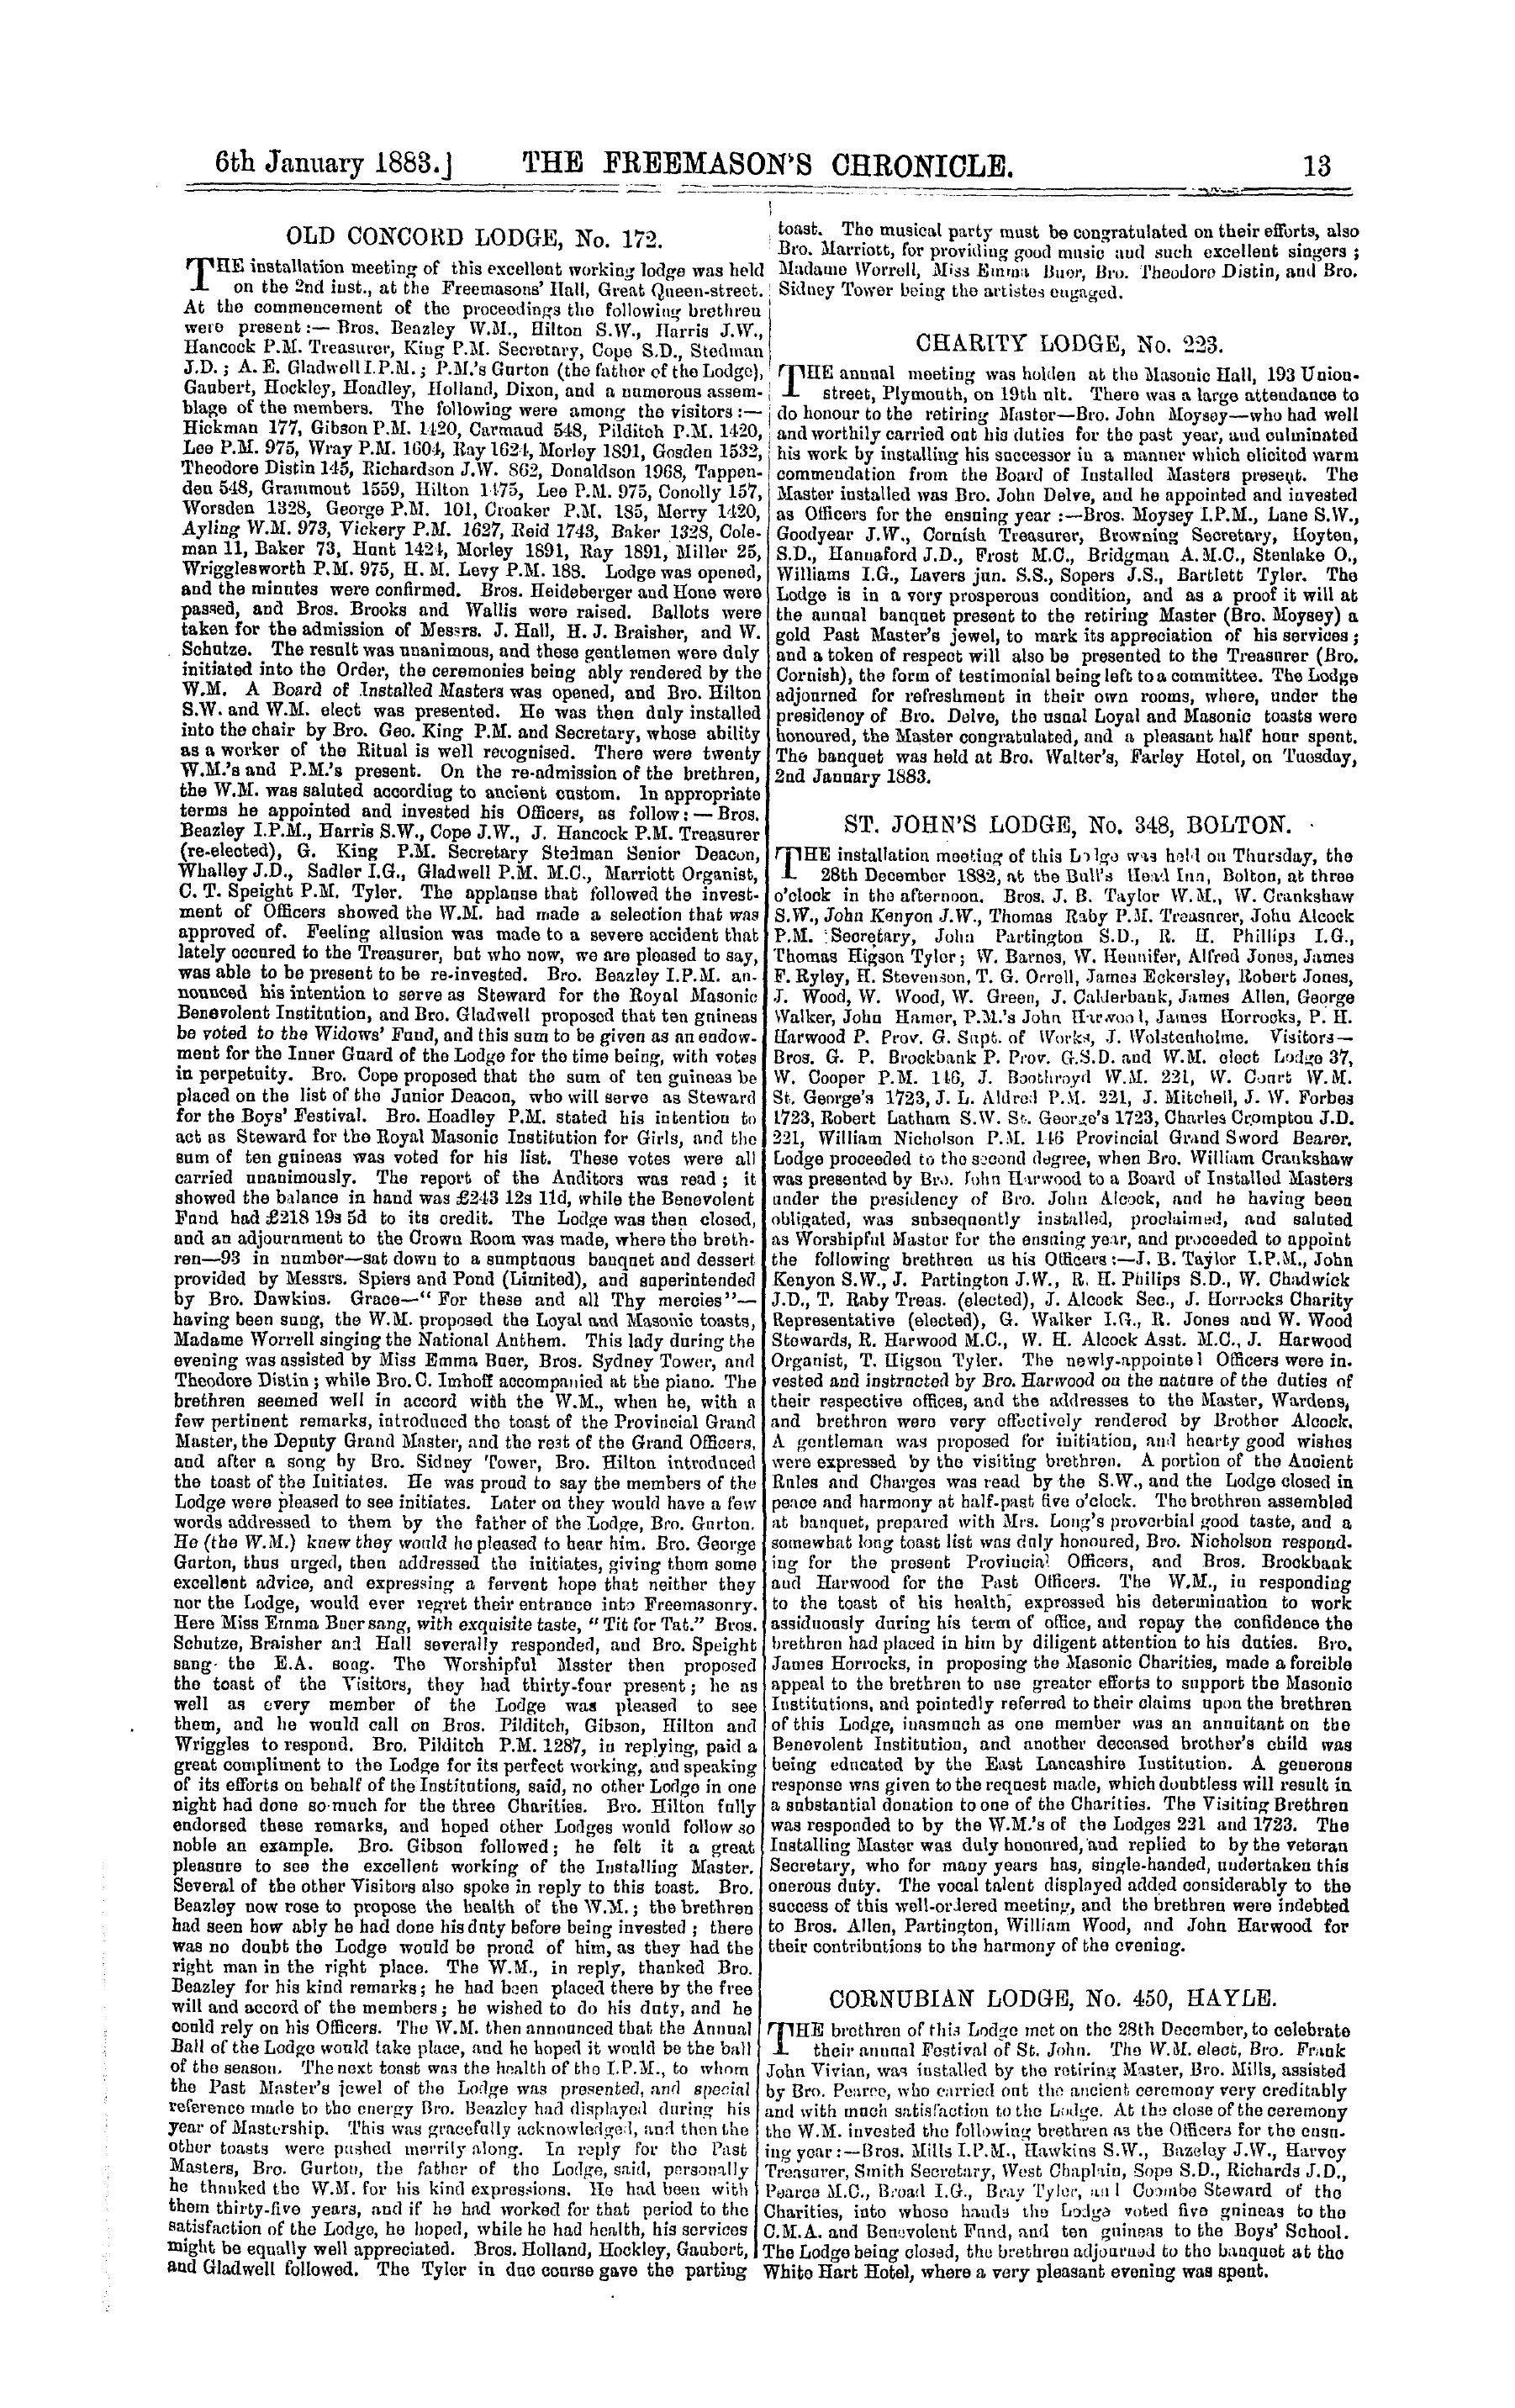 The Freemason's Chronicle: 1883-01-06 - Installation Meetings, &C.